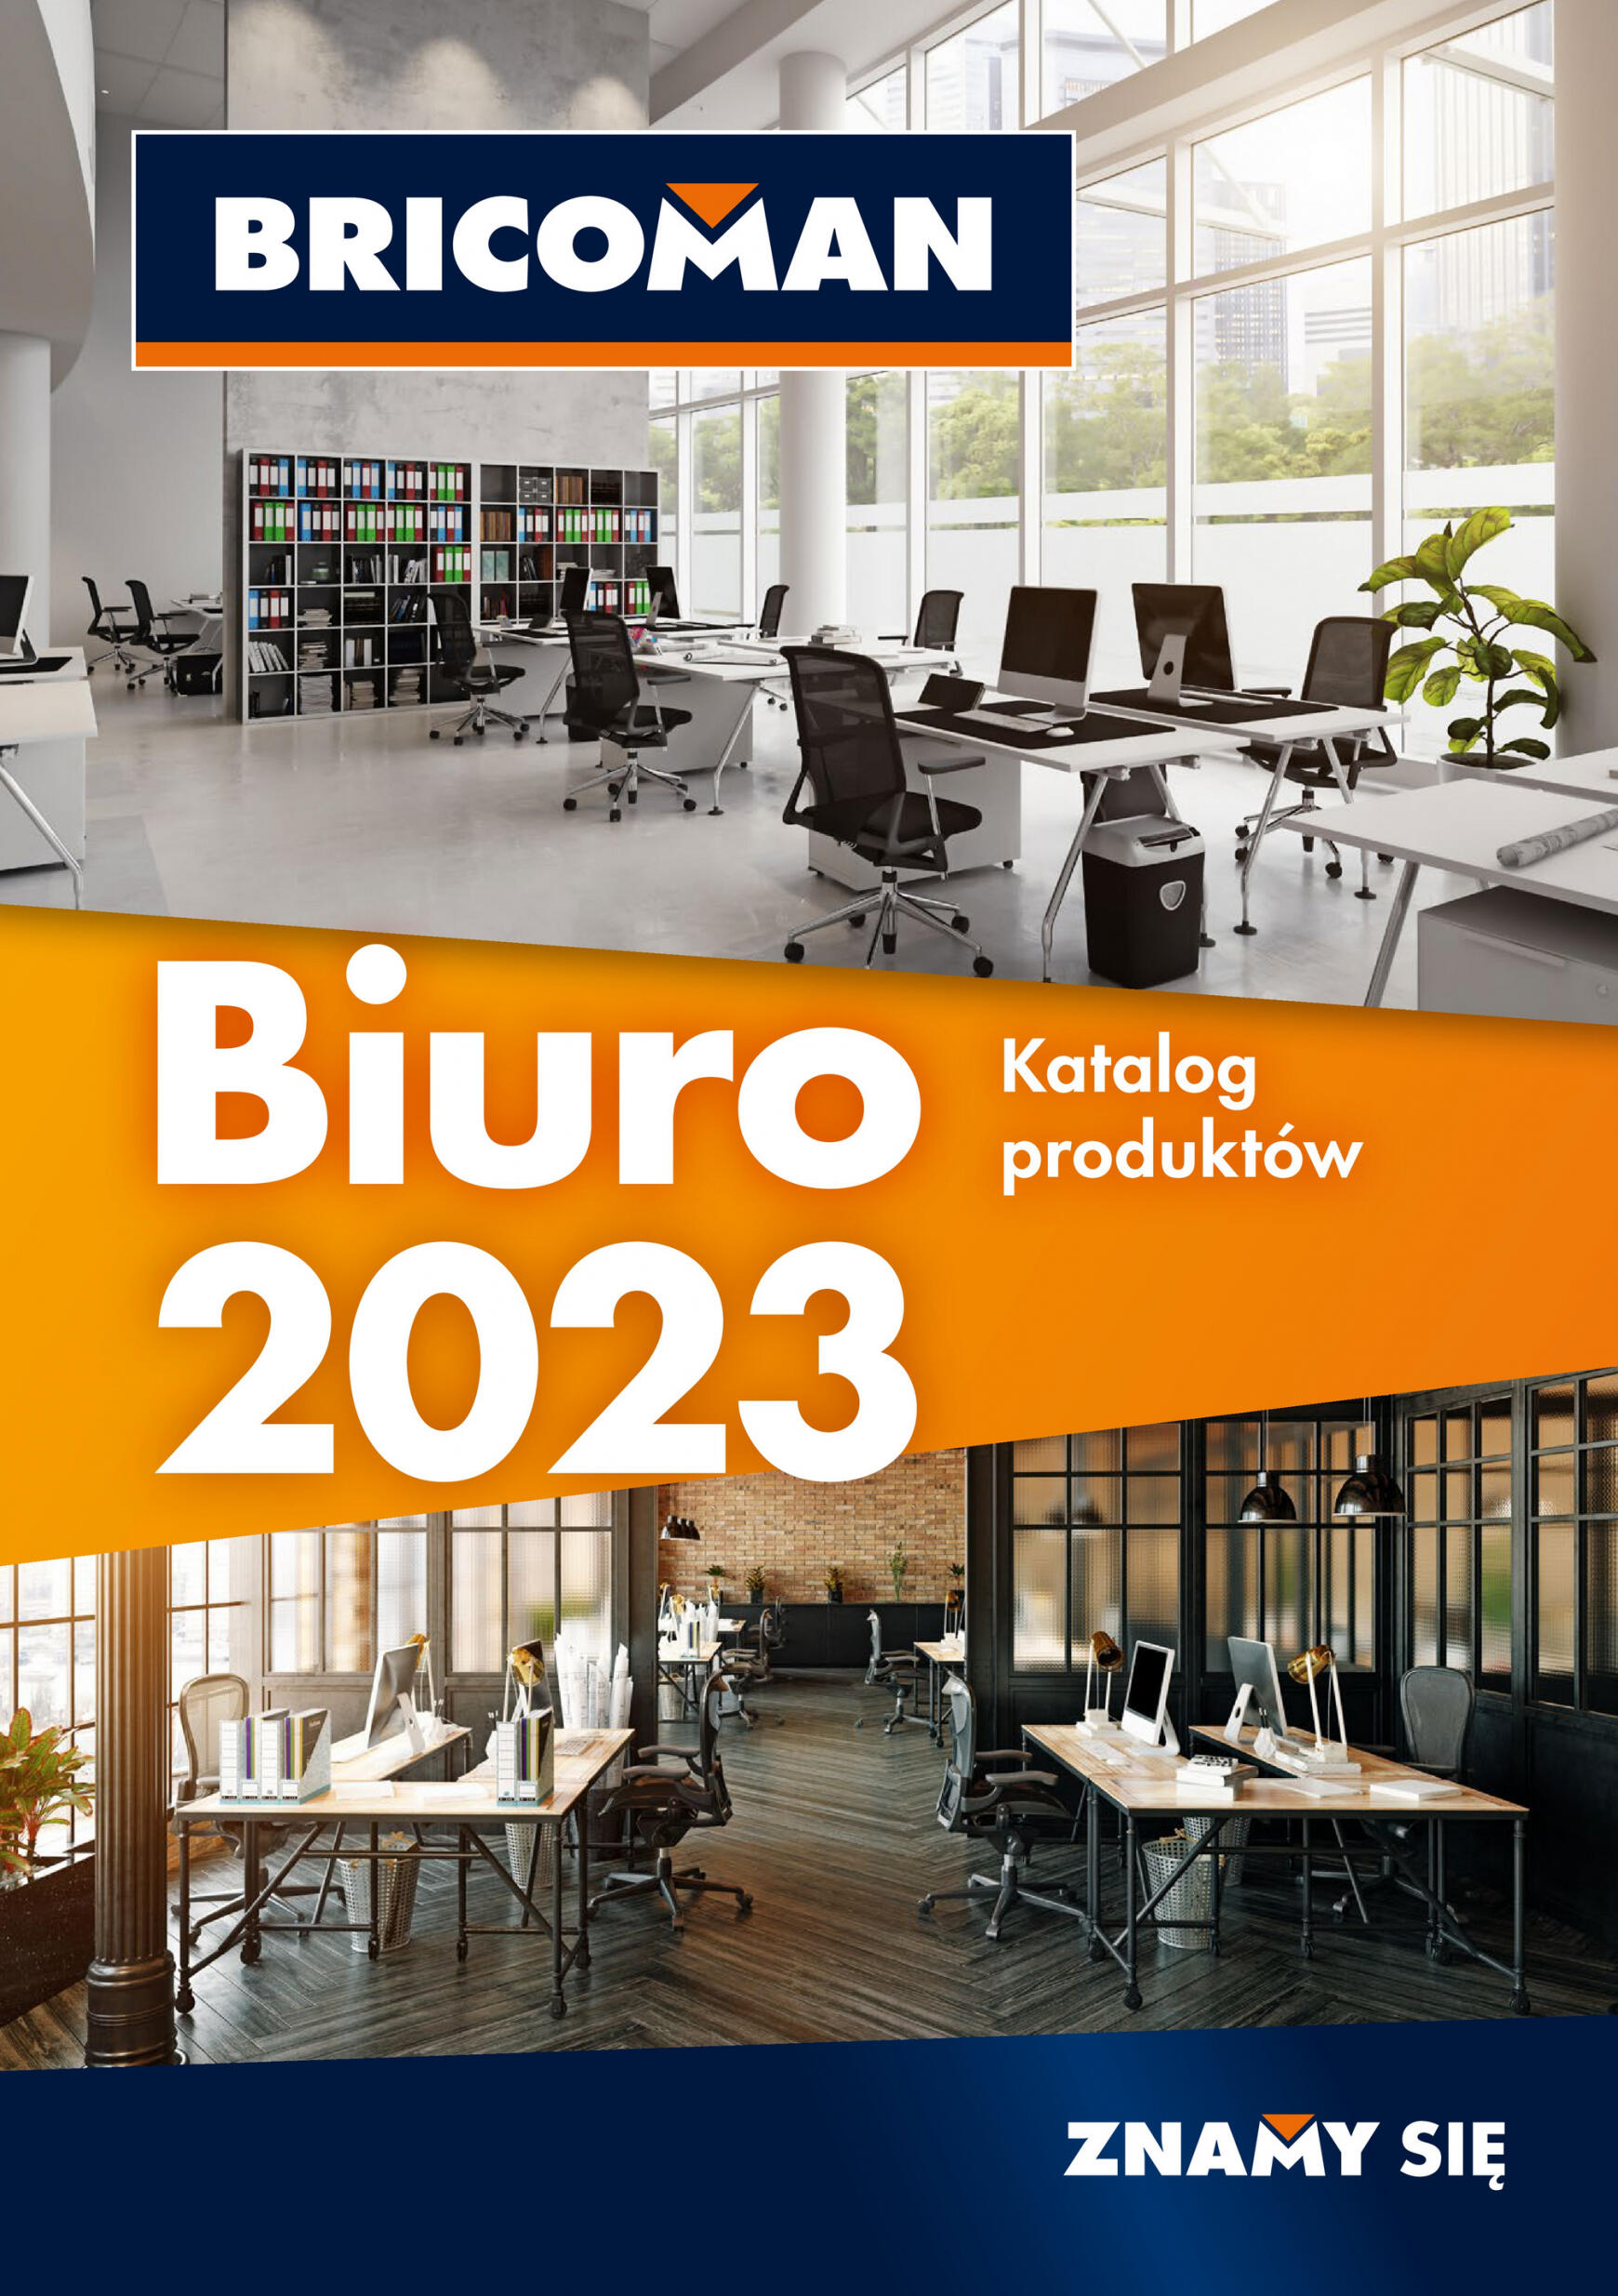 bricoman - Bricoman - Biuro 2023 Katalog produktów